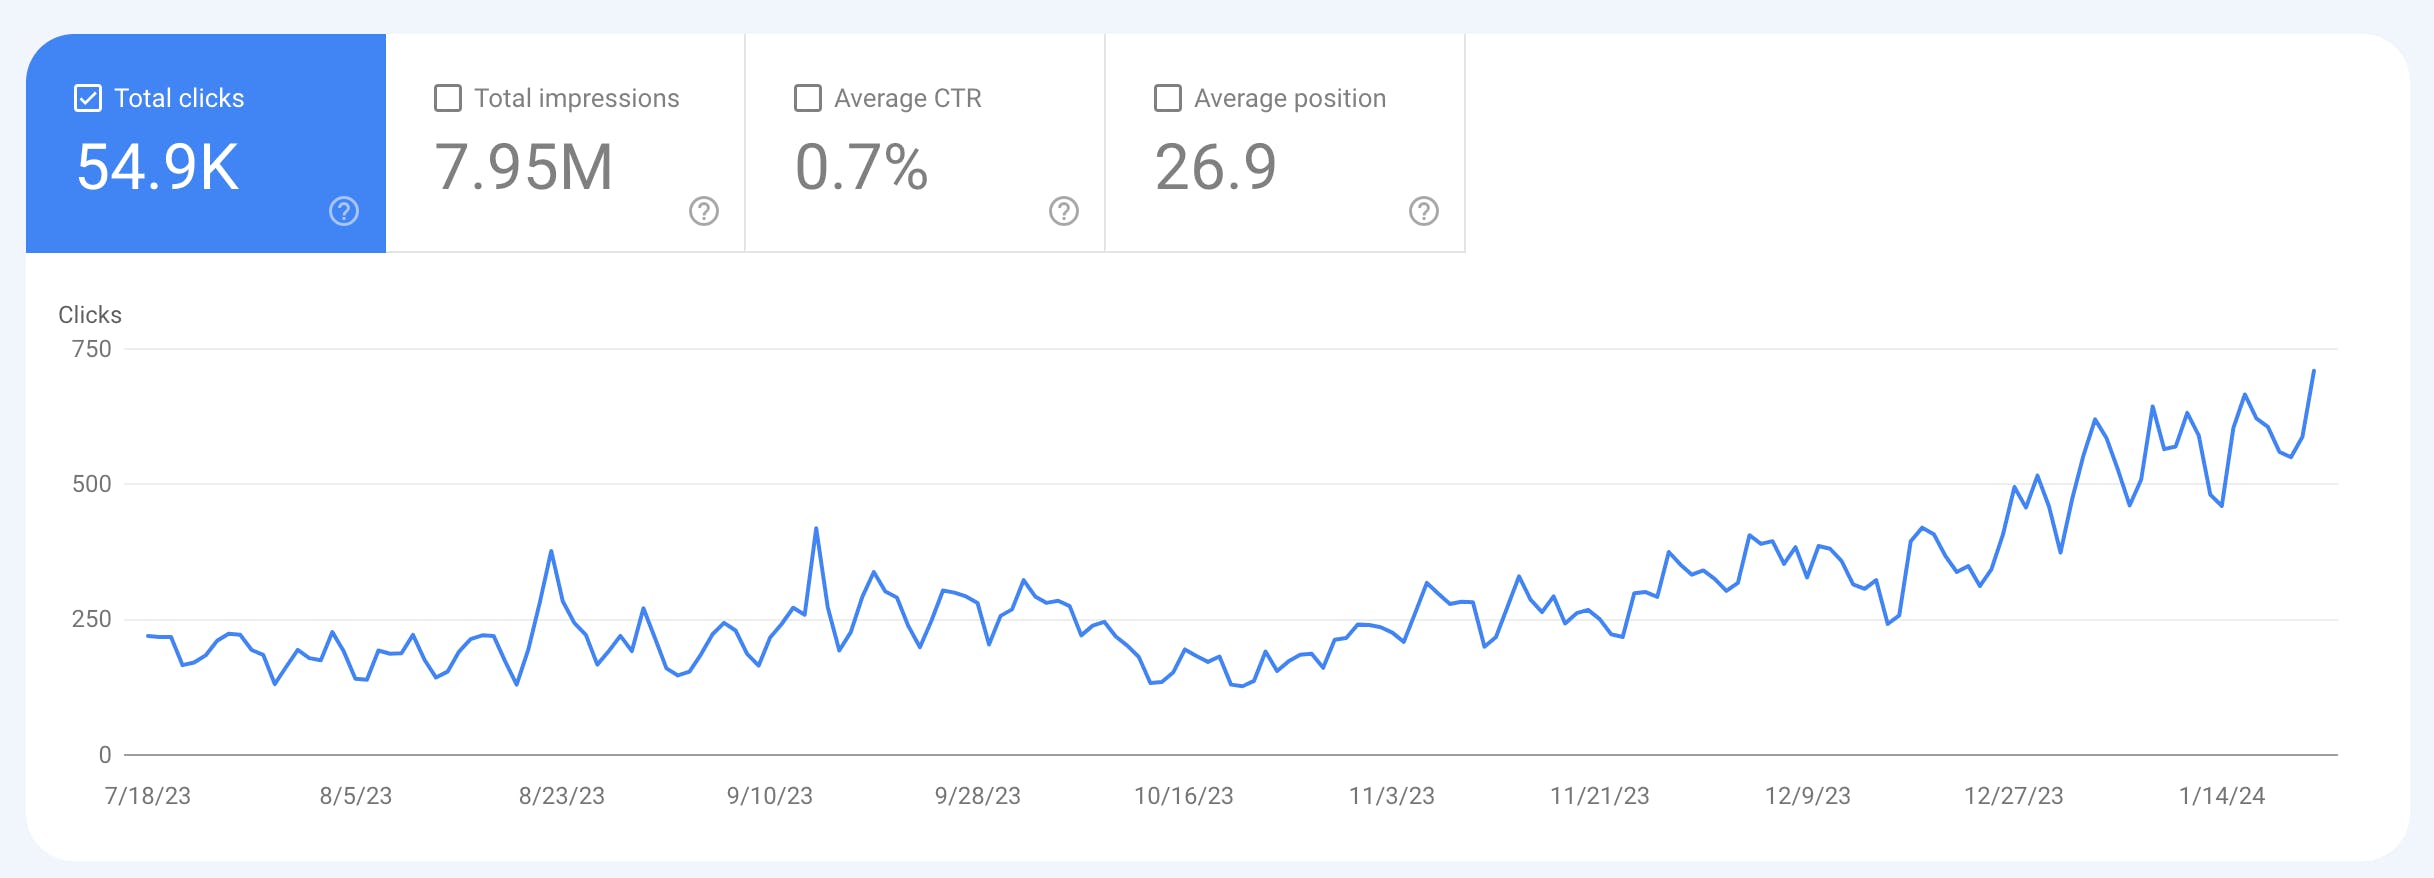 Cumulative total clicks of a website over a period of 7 months